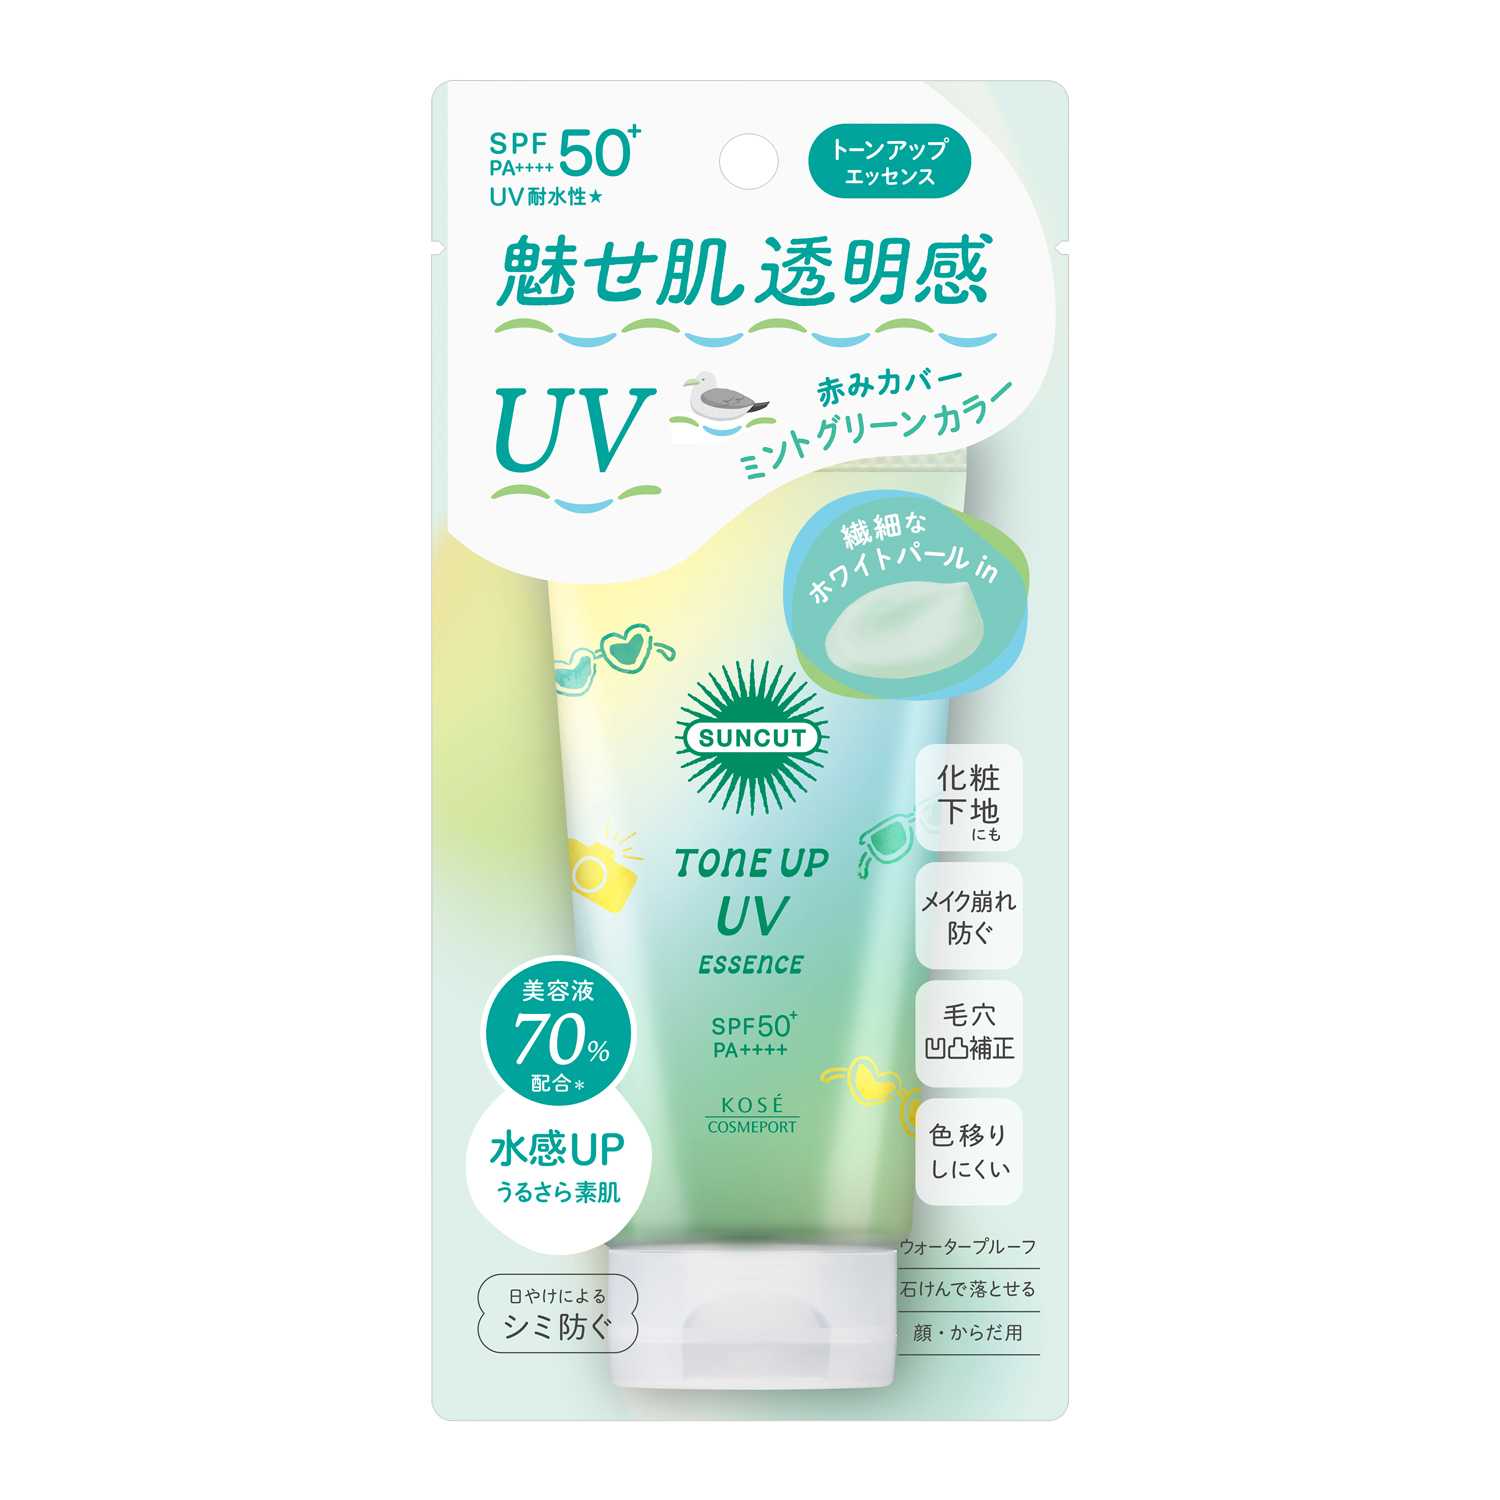 SUNCUT TONE UP UV ESSENCE (MINT GREEN) SPF50+ PA++++ 80 g / ผลิตภัณฑ์ทากันแดด ปรับสีผิวกระจ่างใส